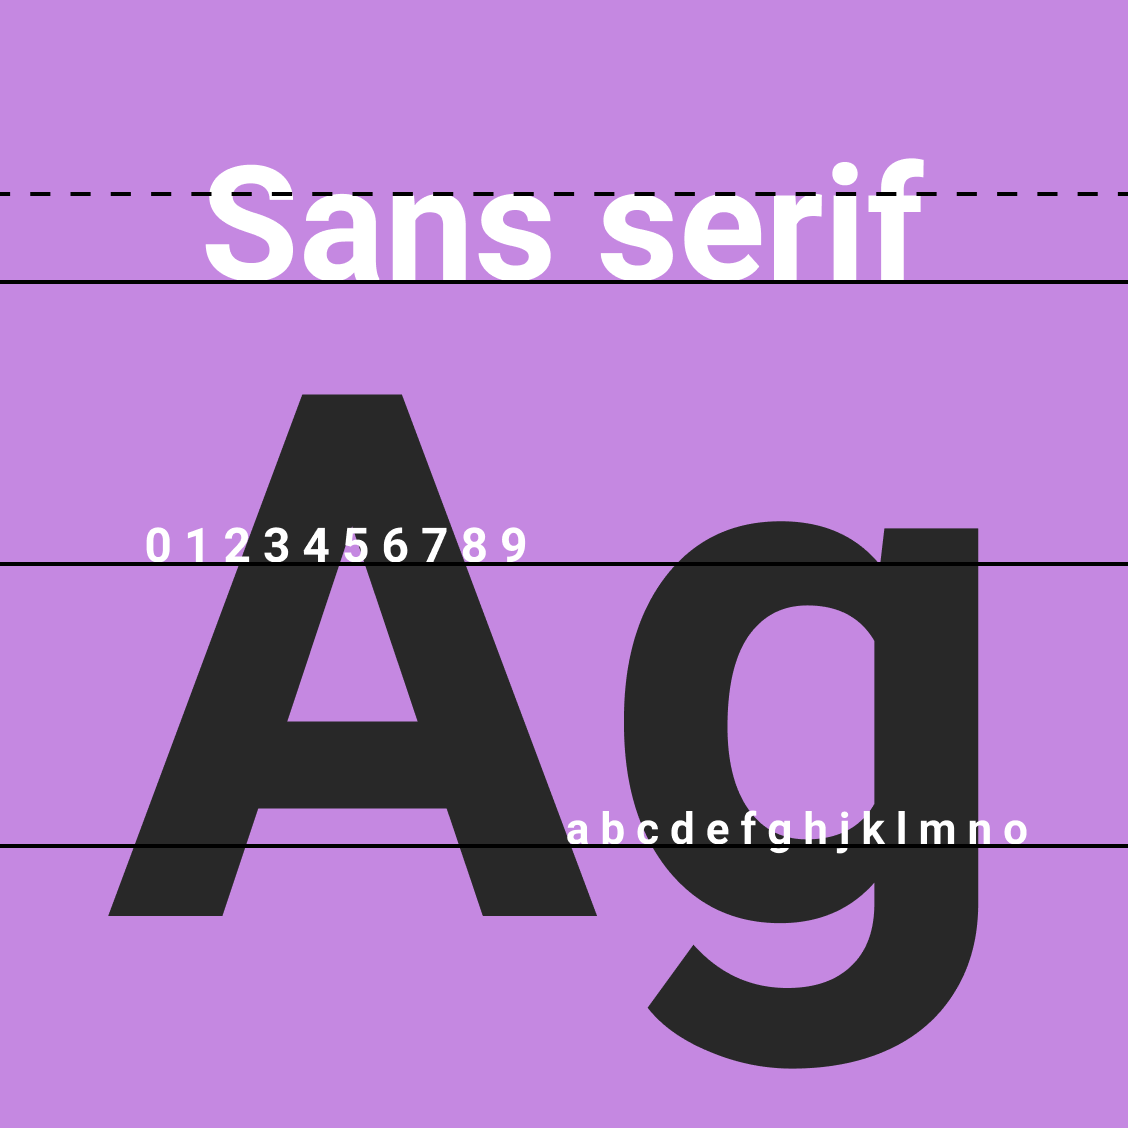 most popular new sans serif typefaces